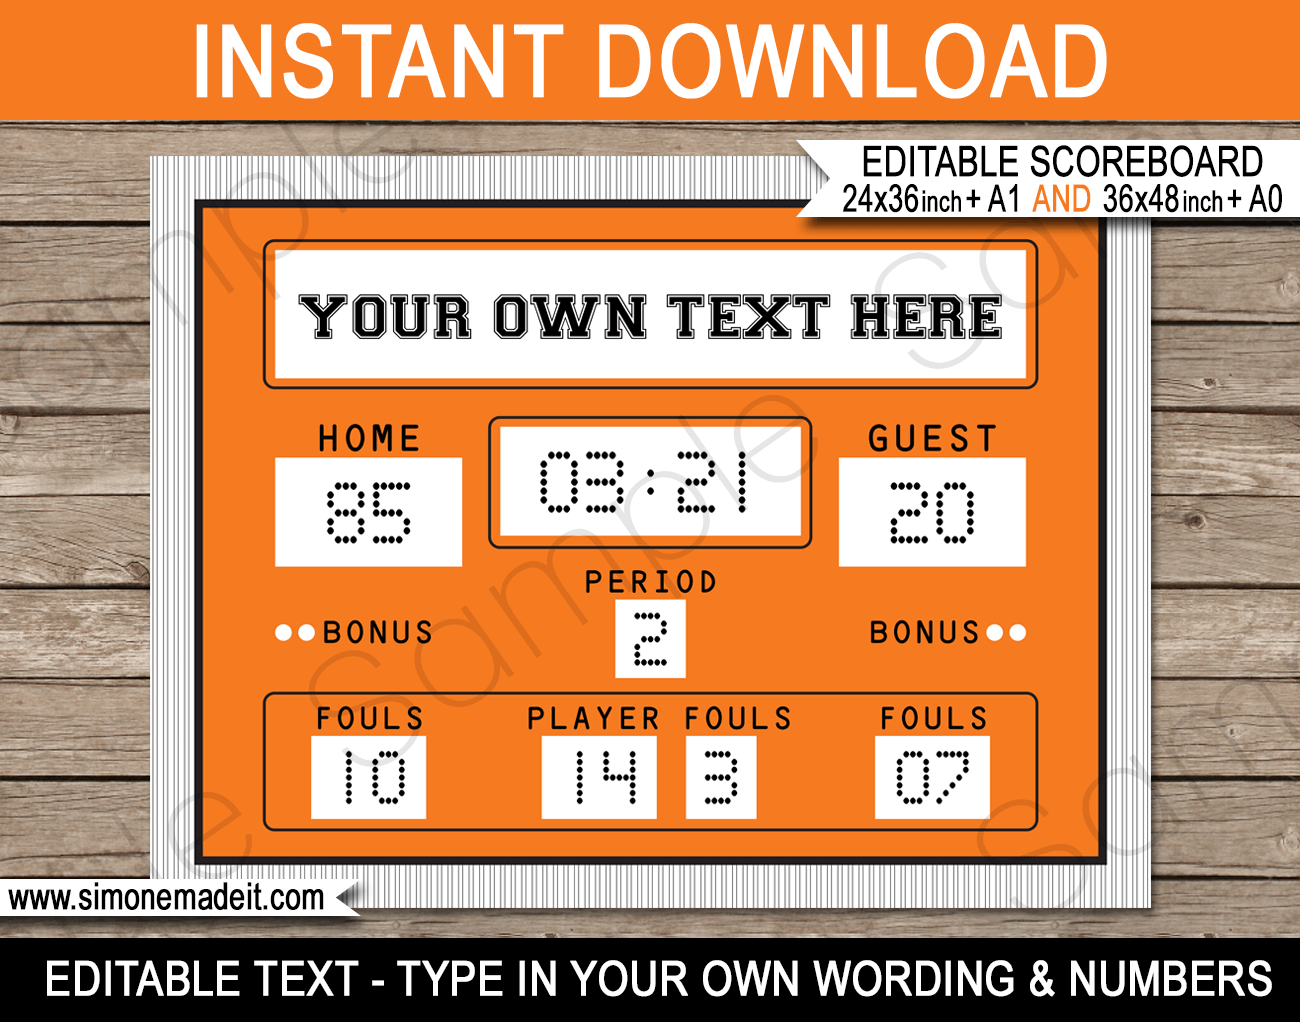 Printable Basketball Party Scoreboard Backdrop | Editable PDF File | Birthday Party Theme | Printable DIY Template | 36x48 inches | 24x36 inches | A1 | A0 | $4.50 via SIMONEmadeit.com